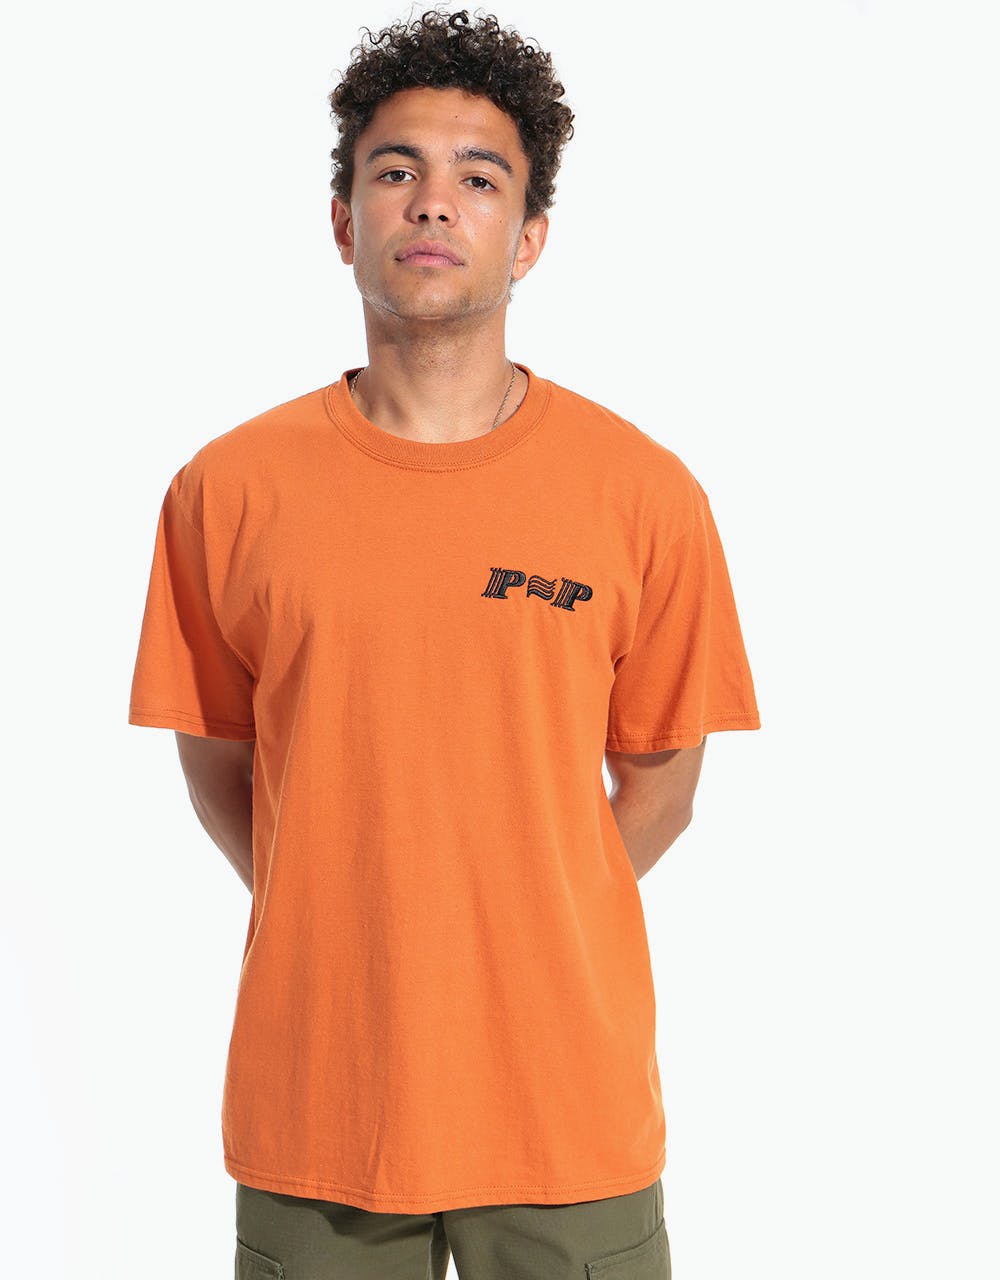 Pass Port PPP~PPP T-Shirt - Texas Orange